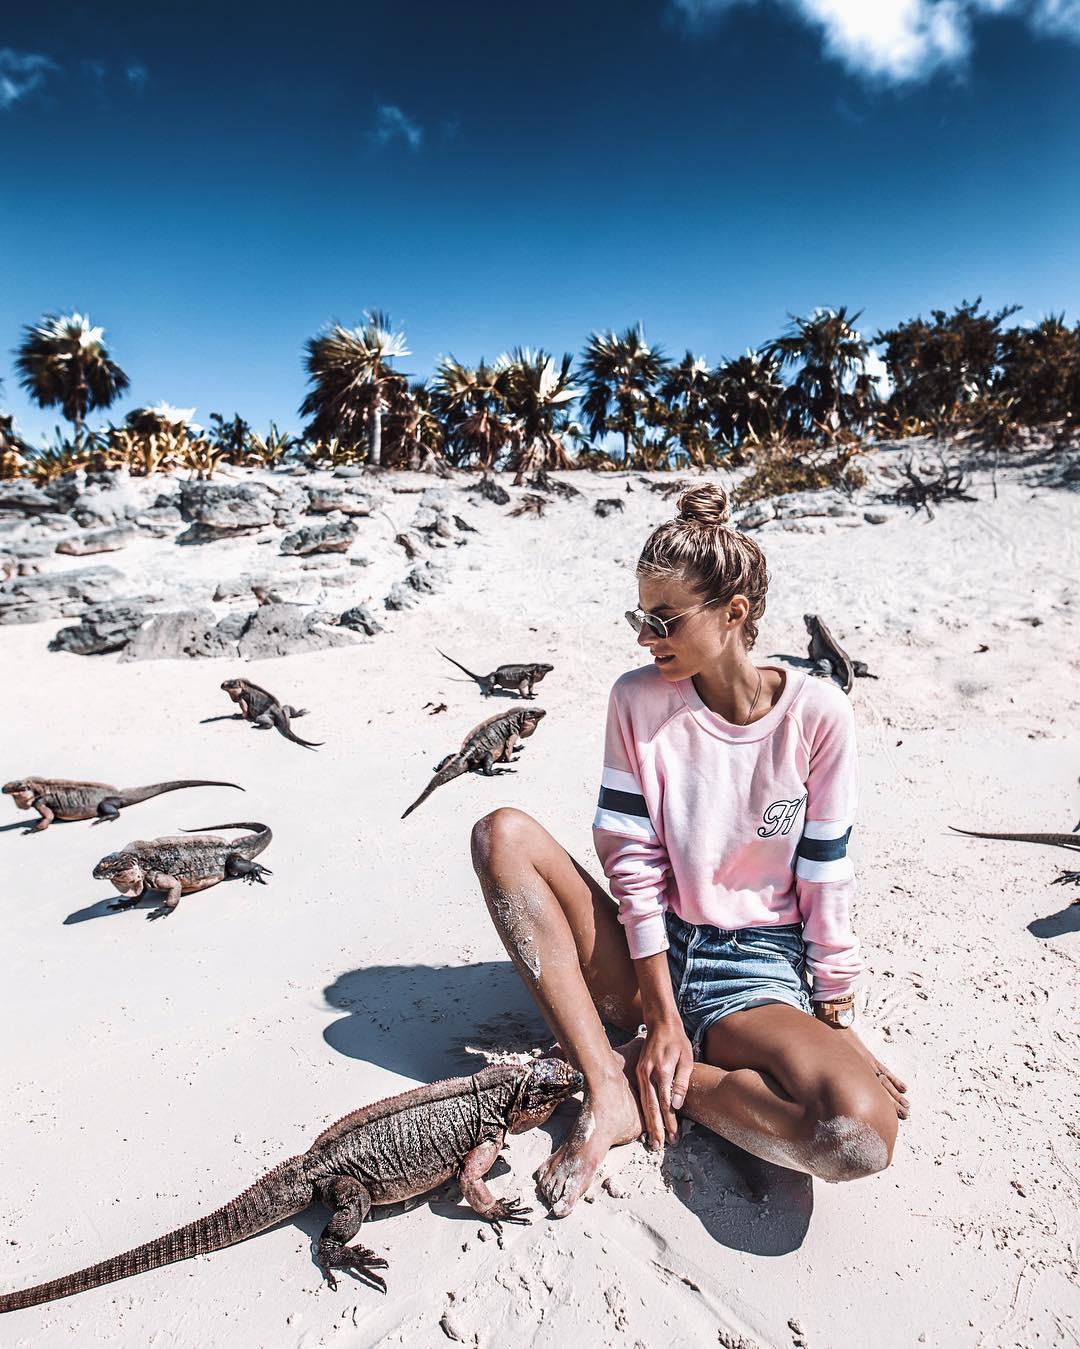 The Exuma Islands, Bahamas, credits to @debiflue on Instagram